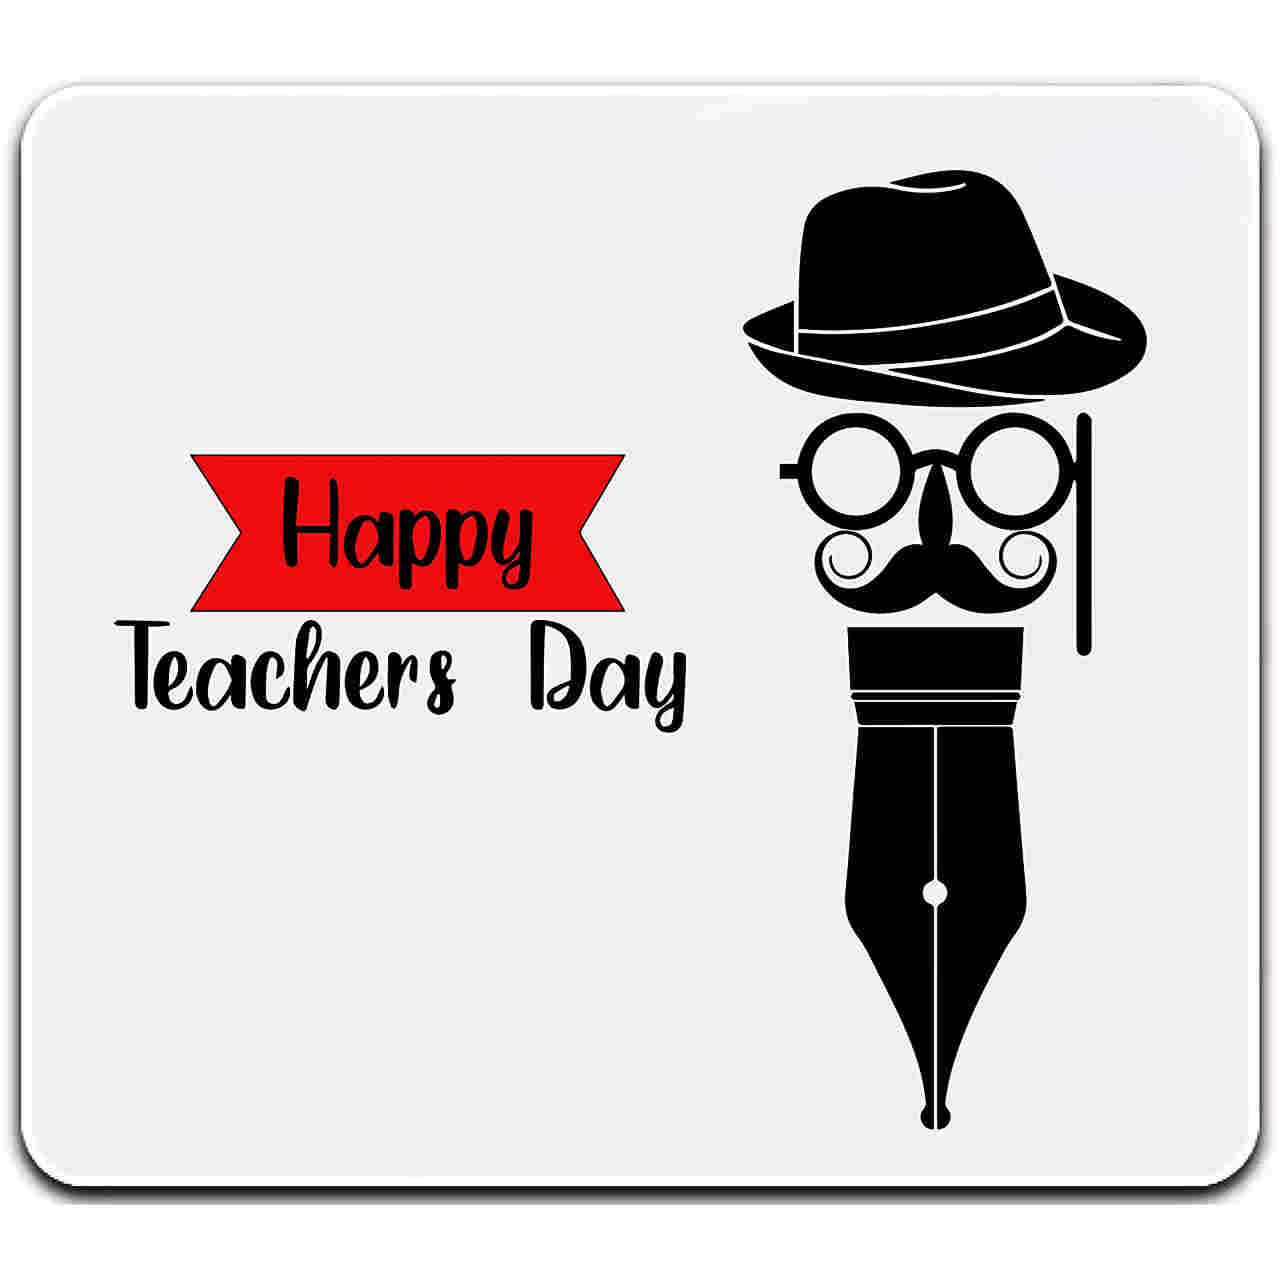 HAPPY TEACHERS DAY MOUSE PAD (Design 6)